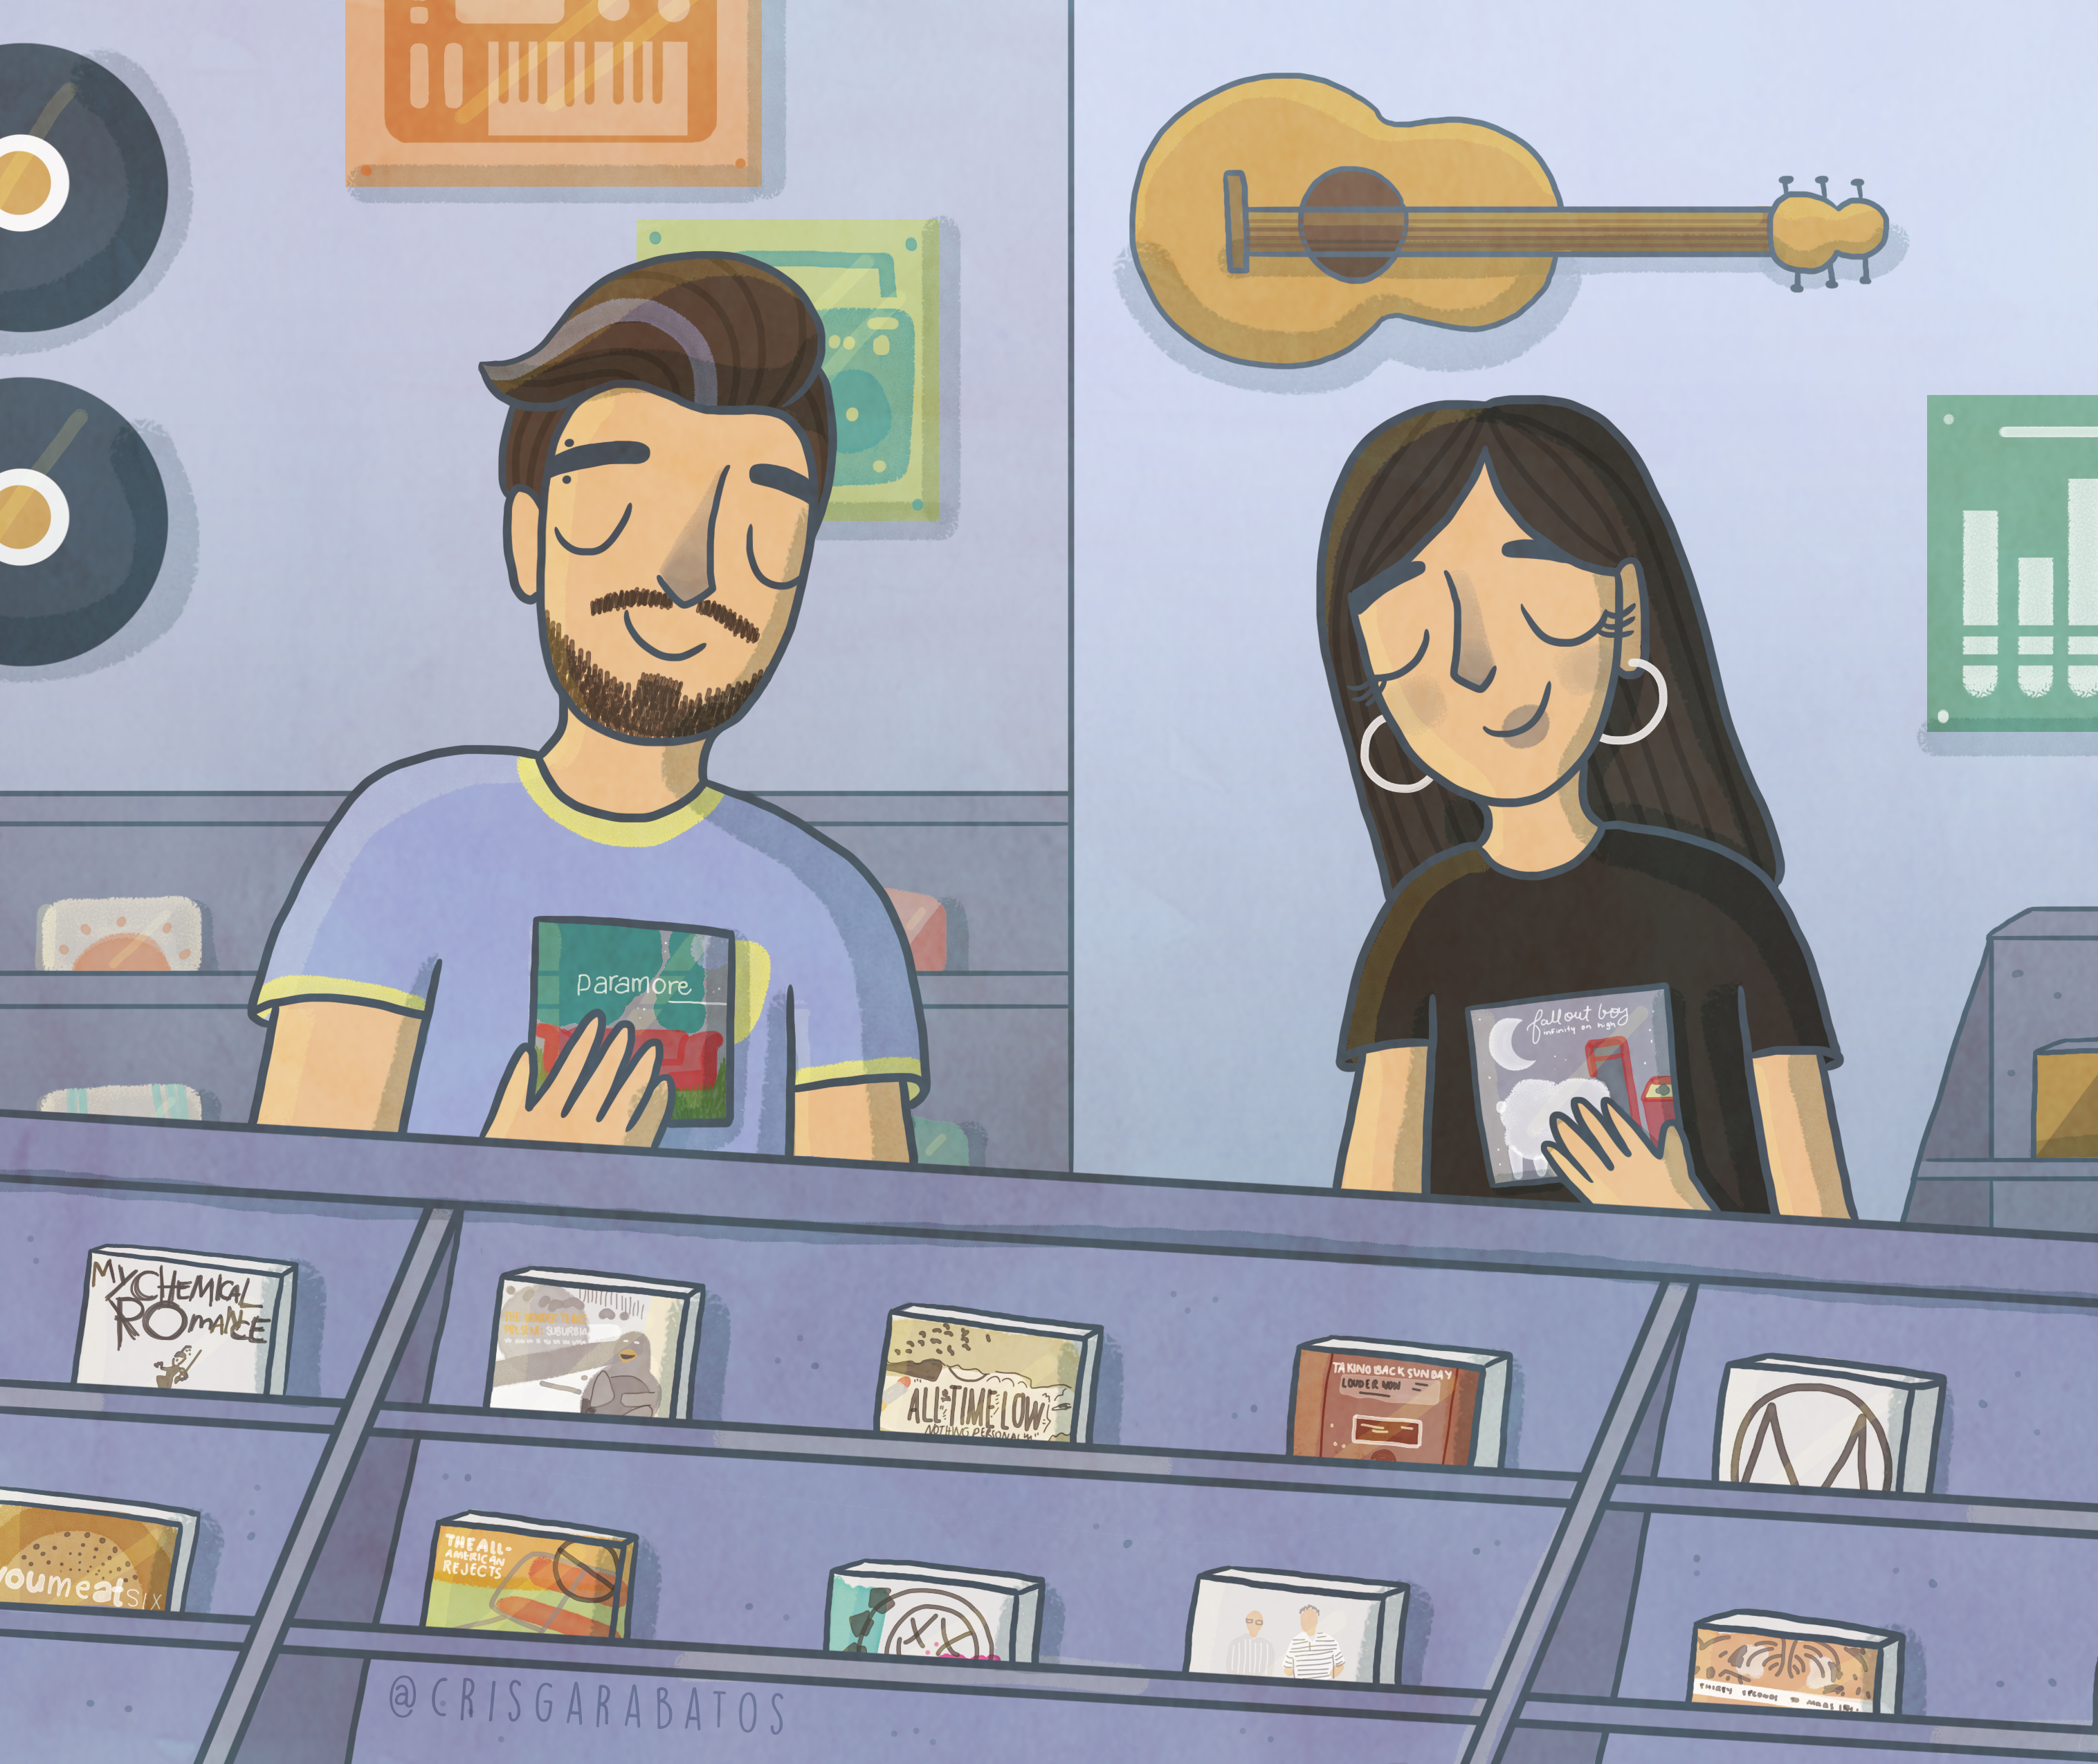 Record store illustration